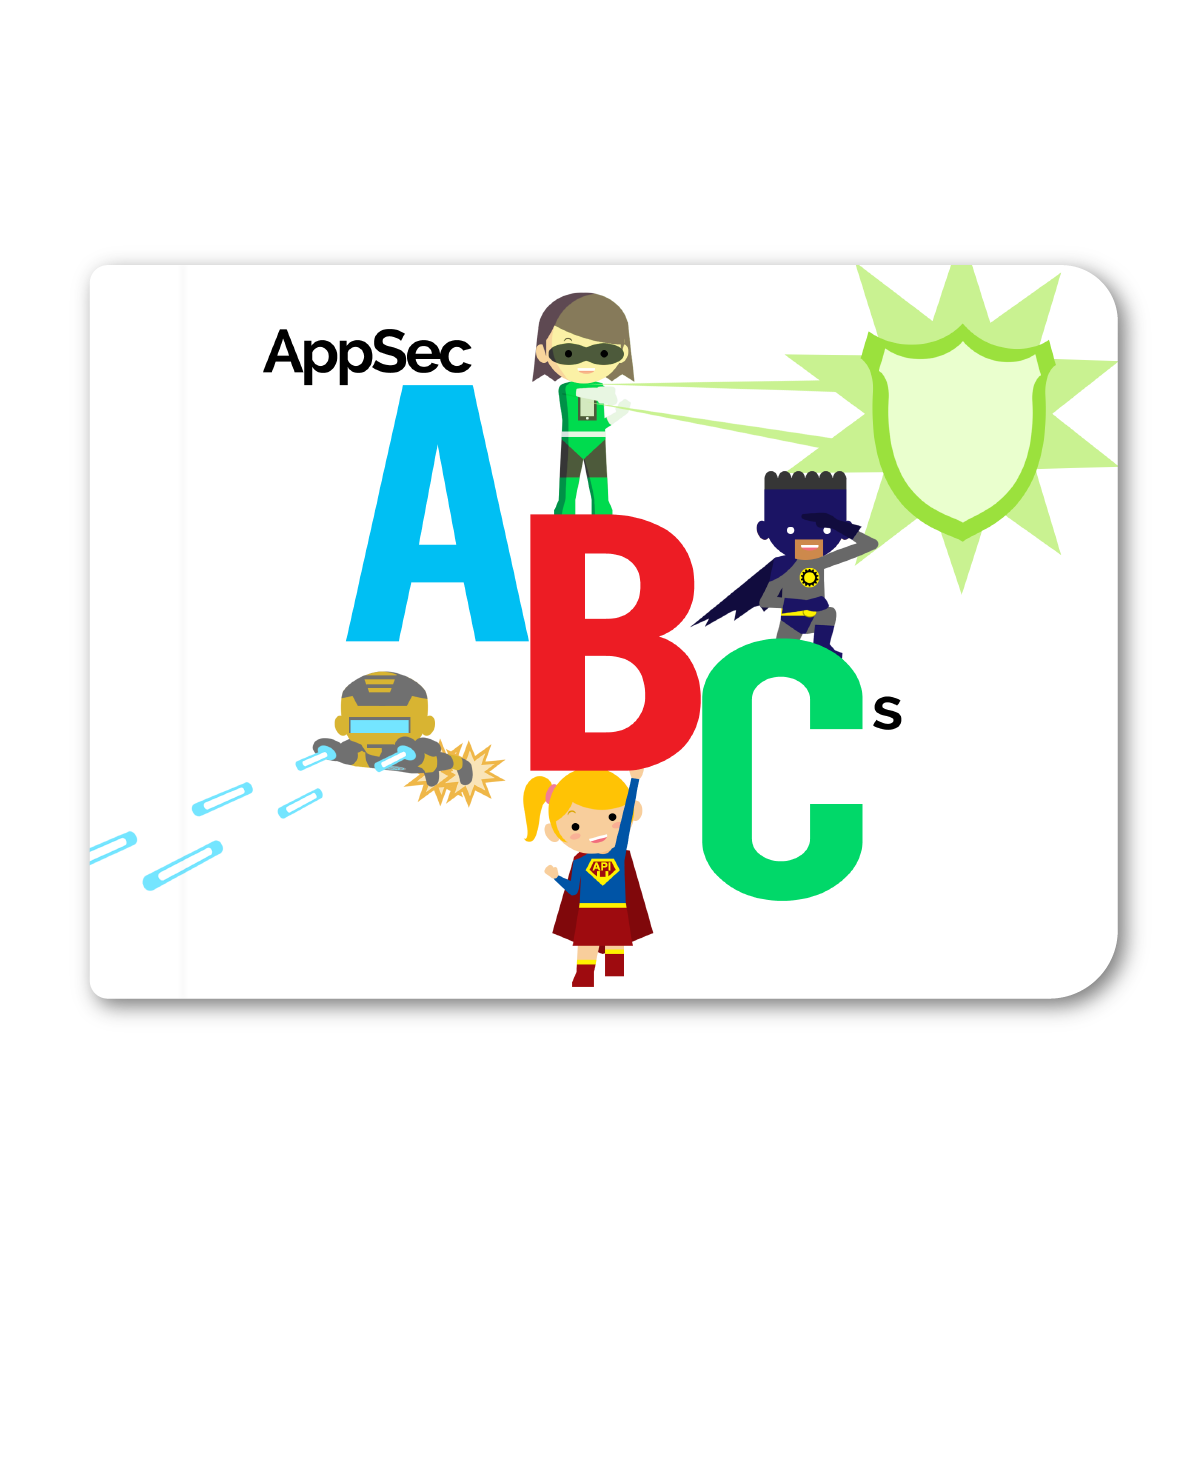 AppSecABCs-1